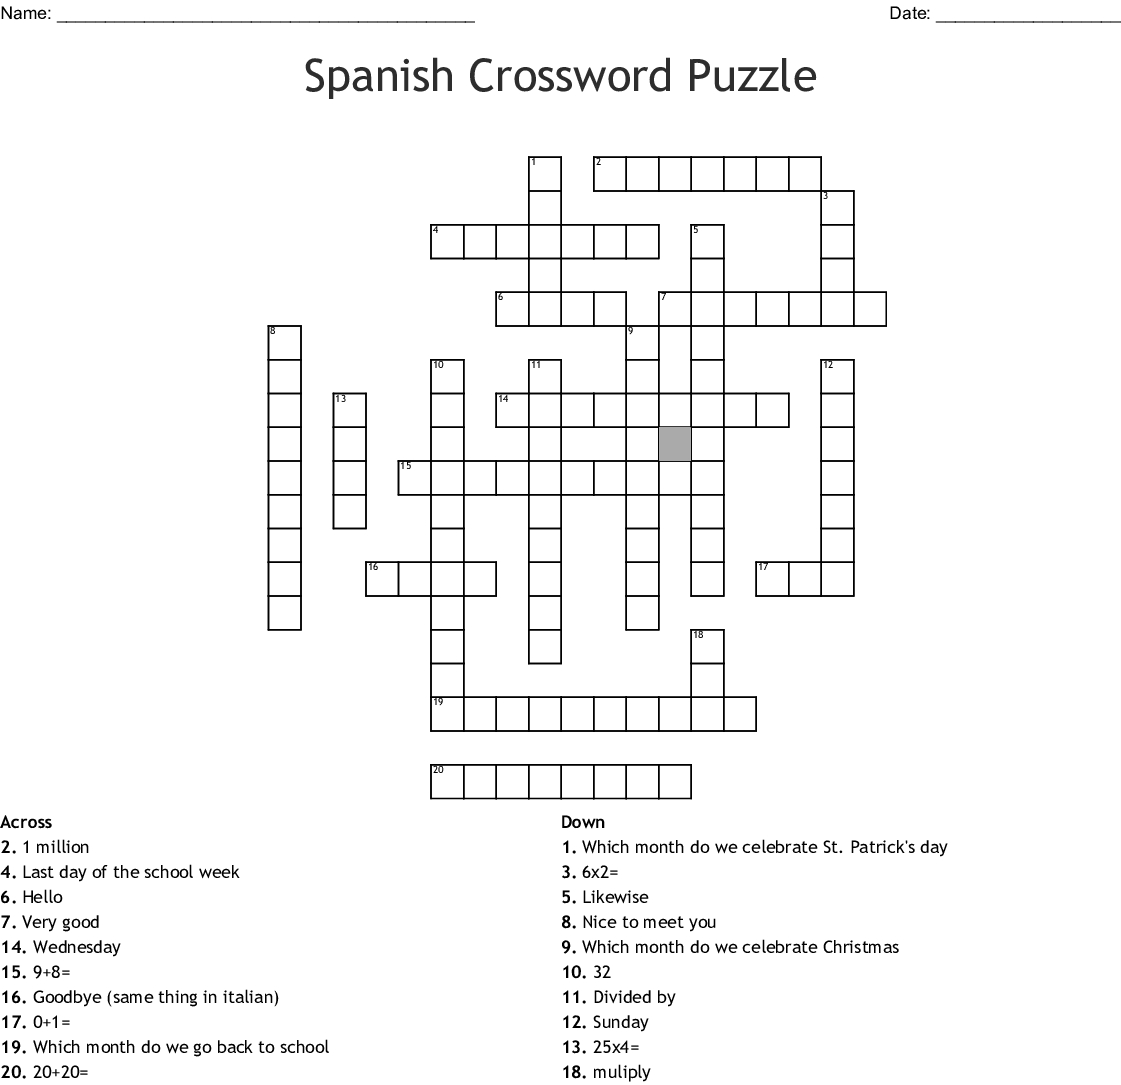 Spanish Crossword Puzzle Crossword - Wordmint - Printable Spanish Crossword Puzzle Answers